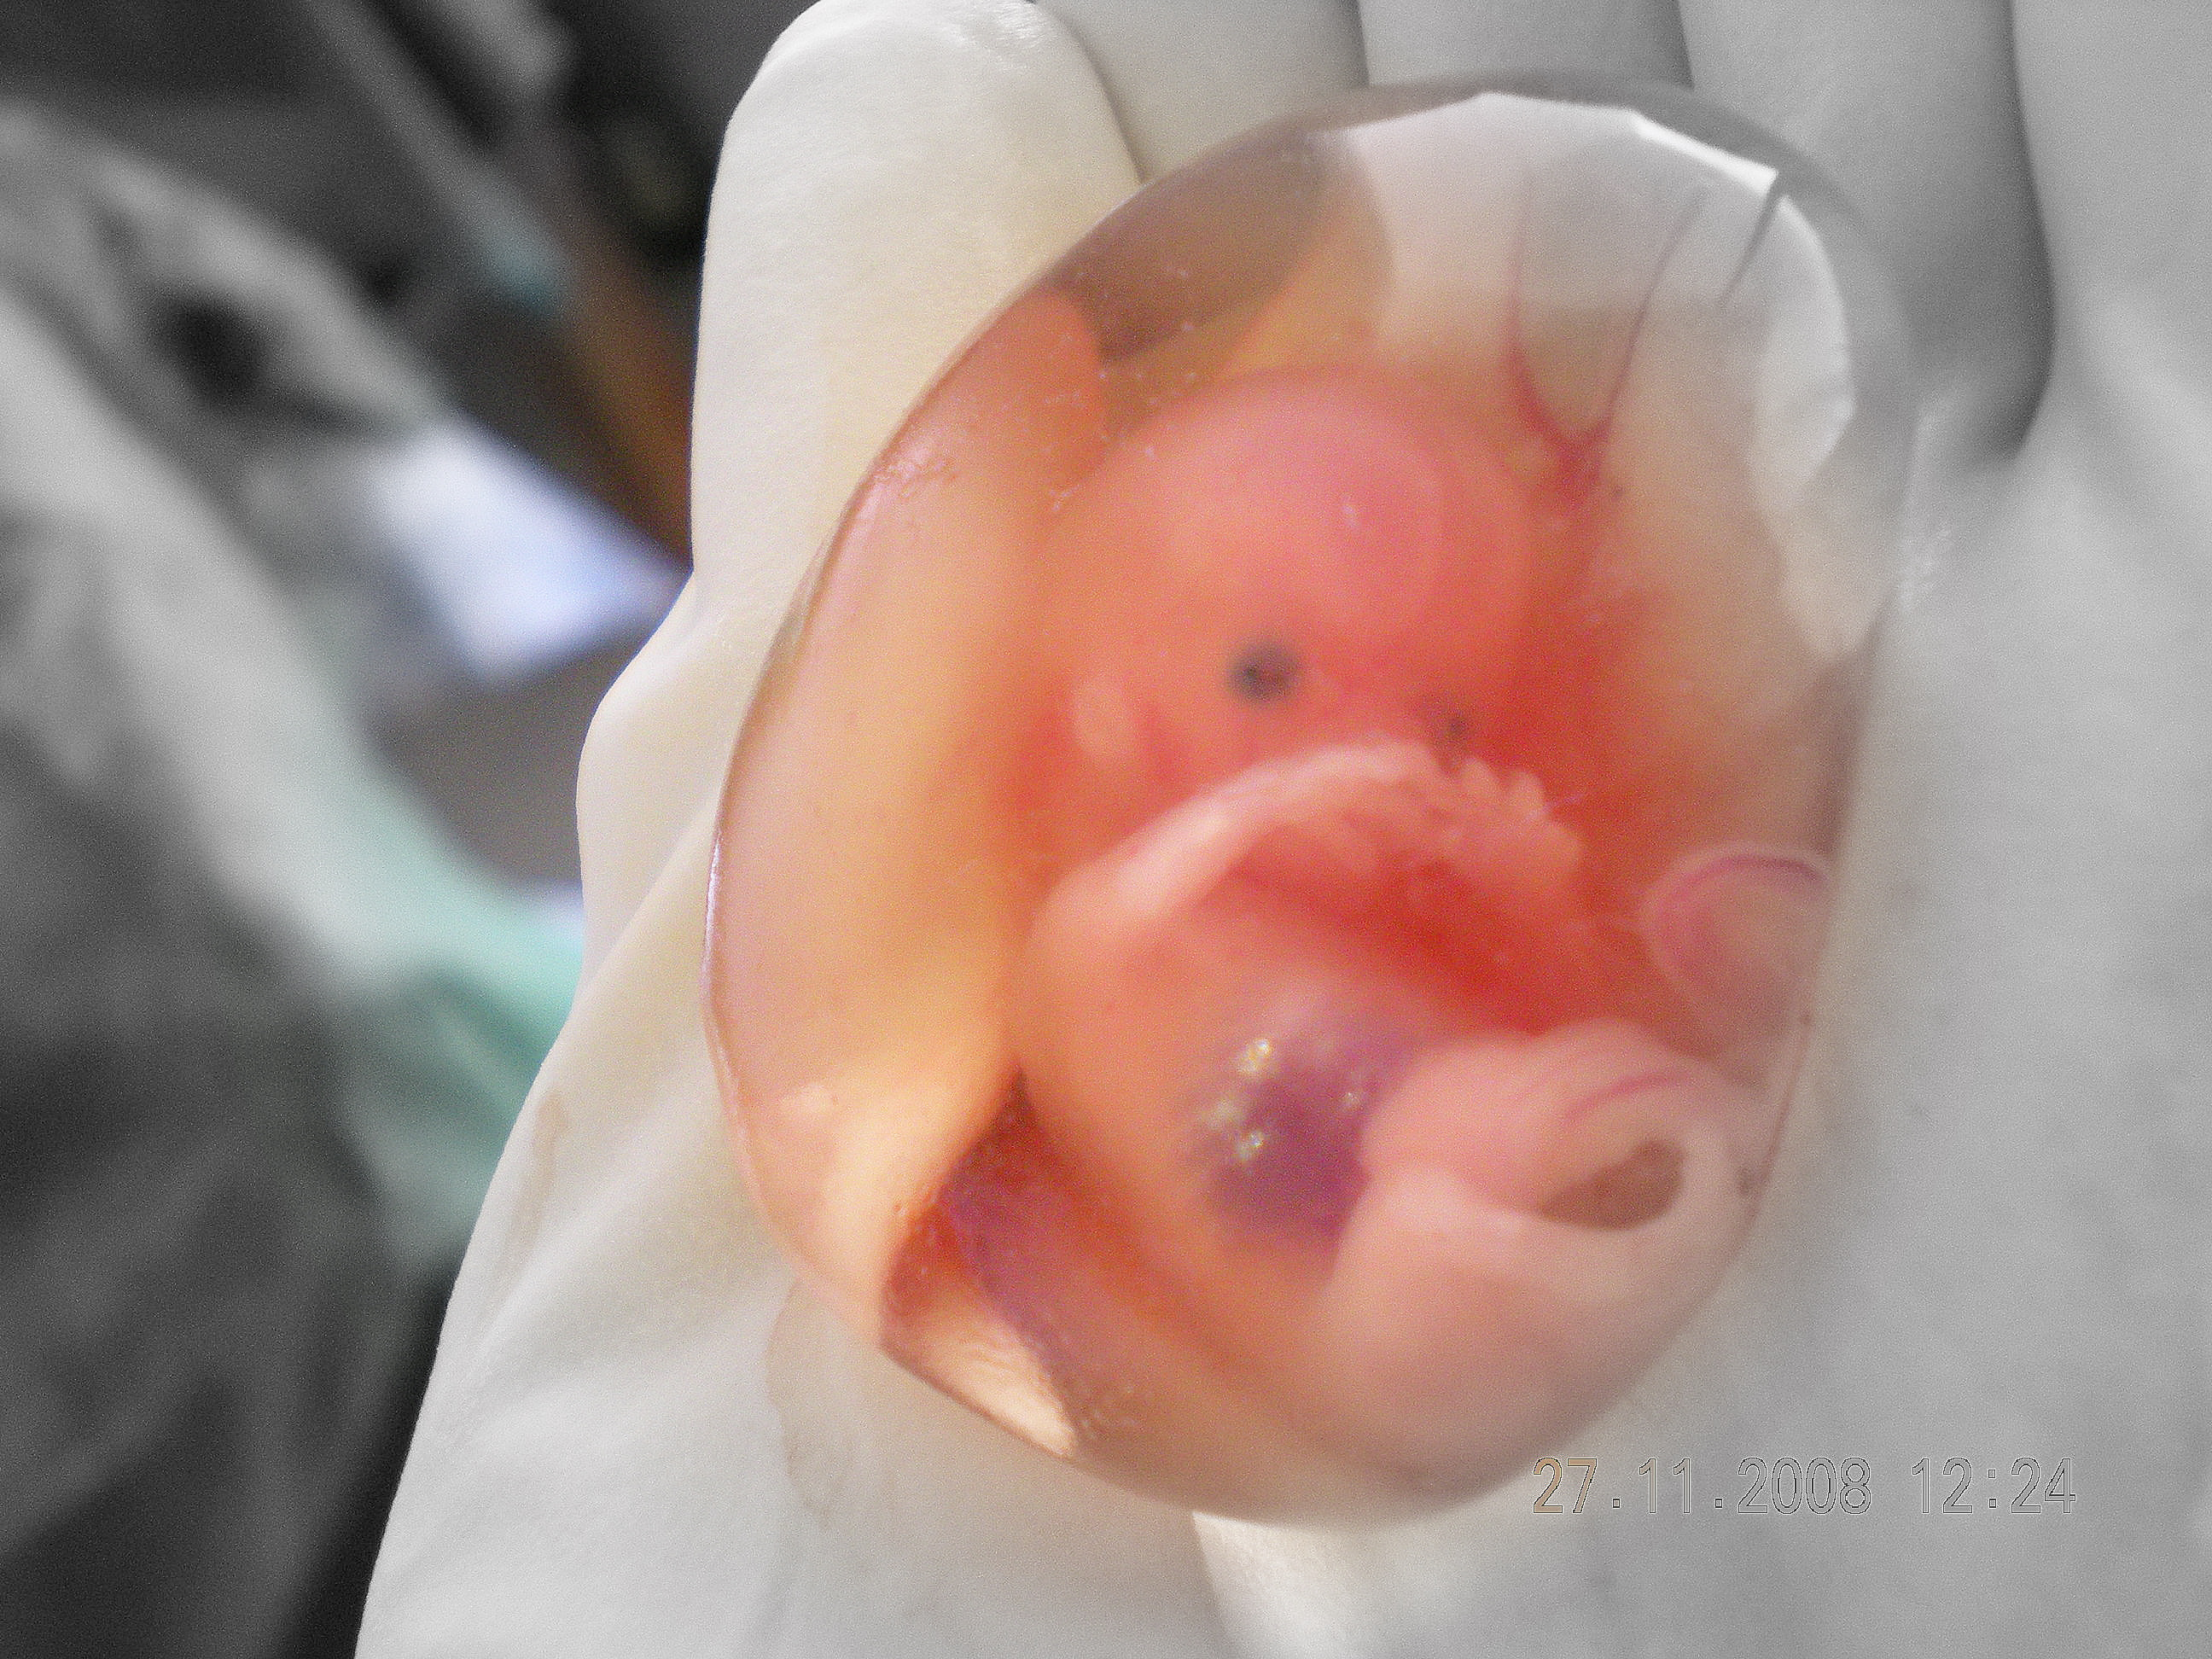 Human_fetus_10_weeks_-_therapeutic_abortion.jpg